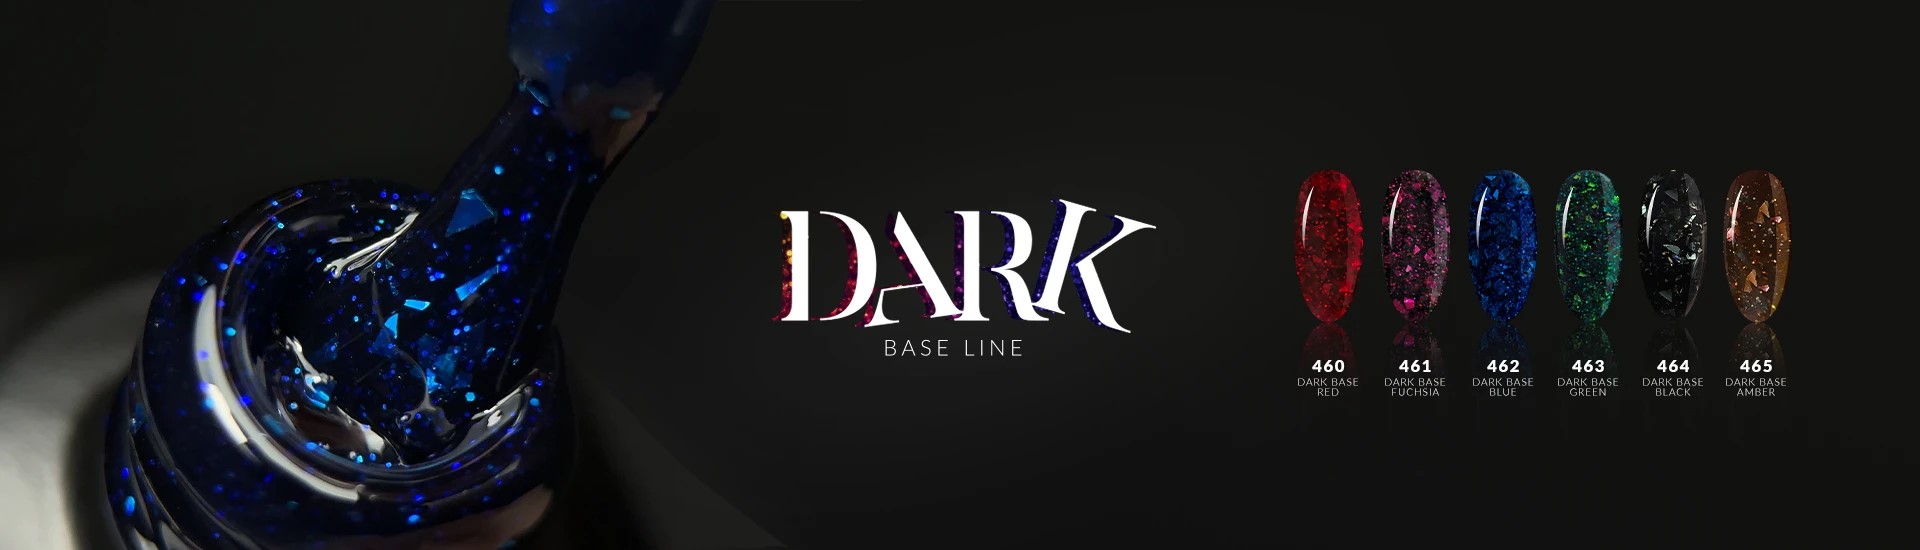 Dark Base Cover Line - Heart Glow